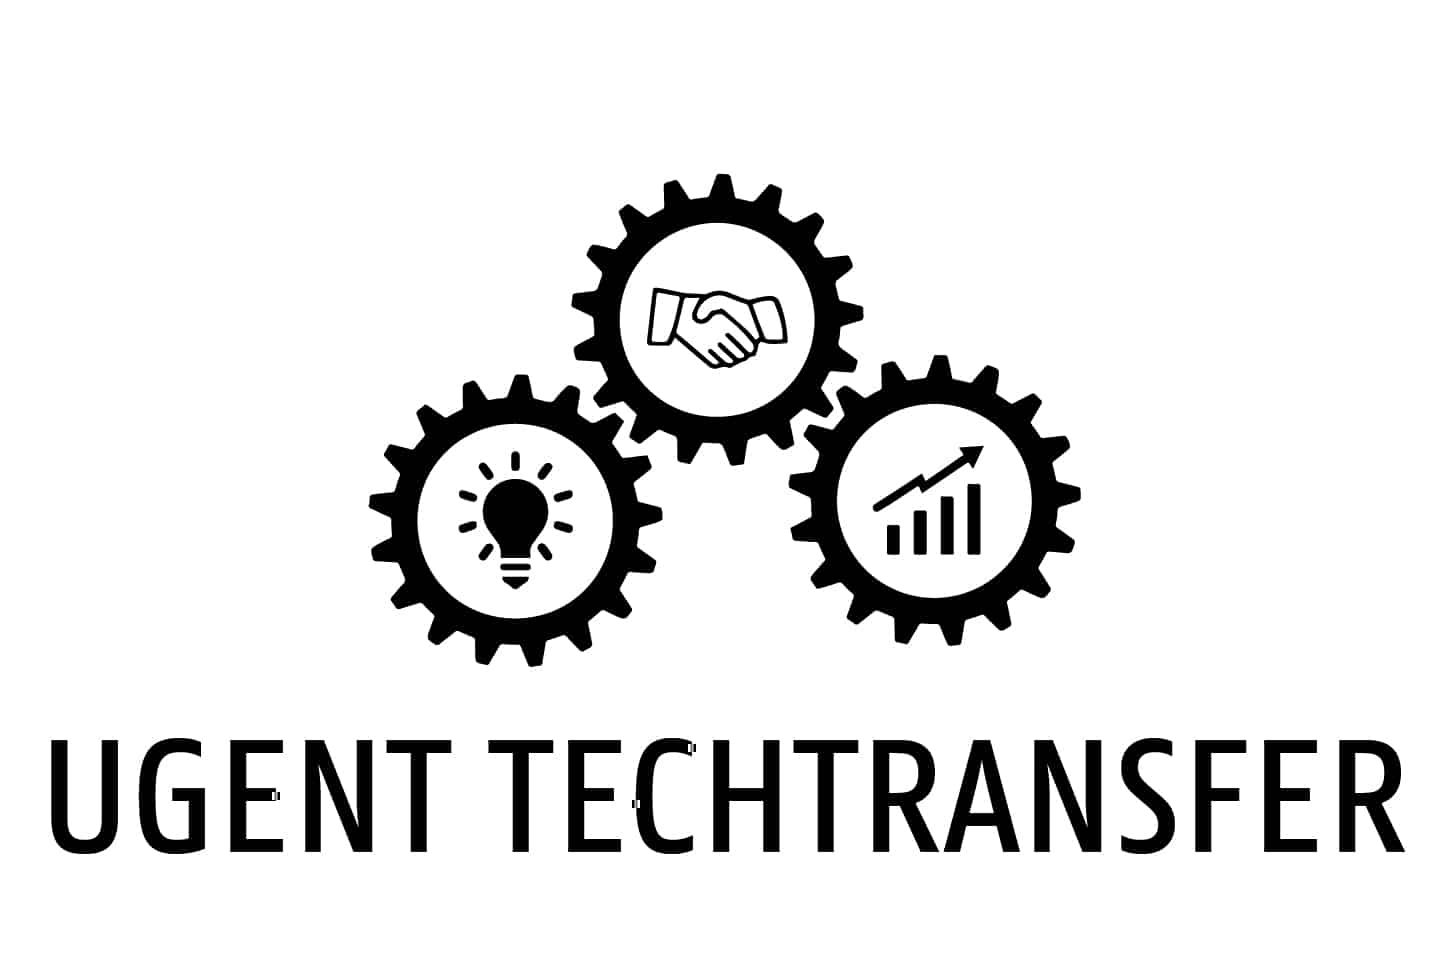 UGent TechTransfer